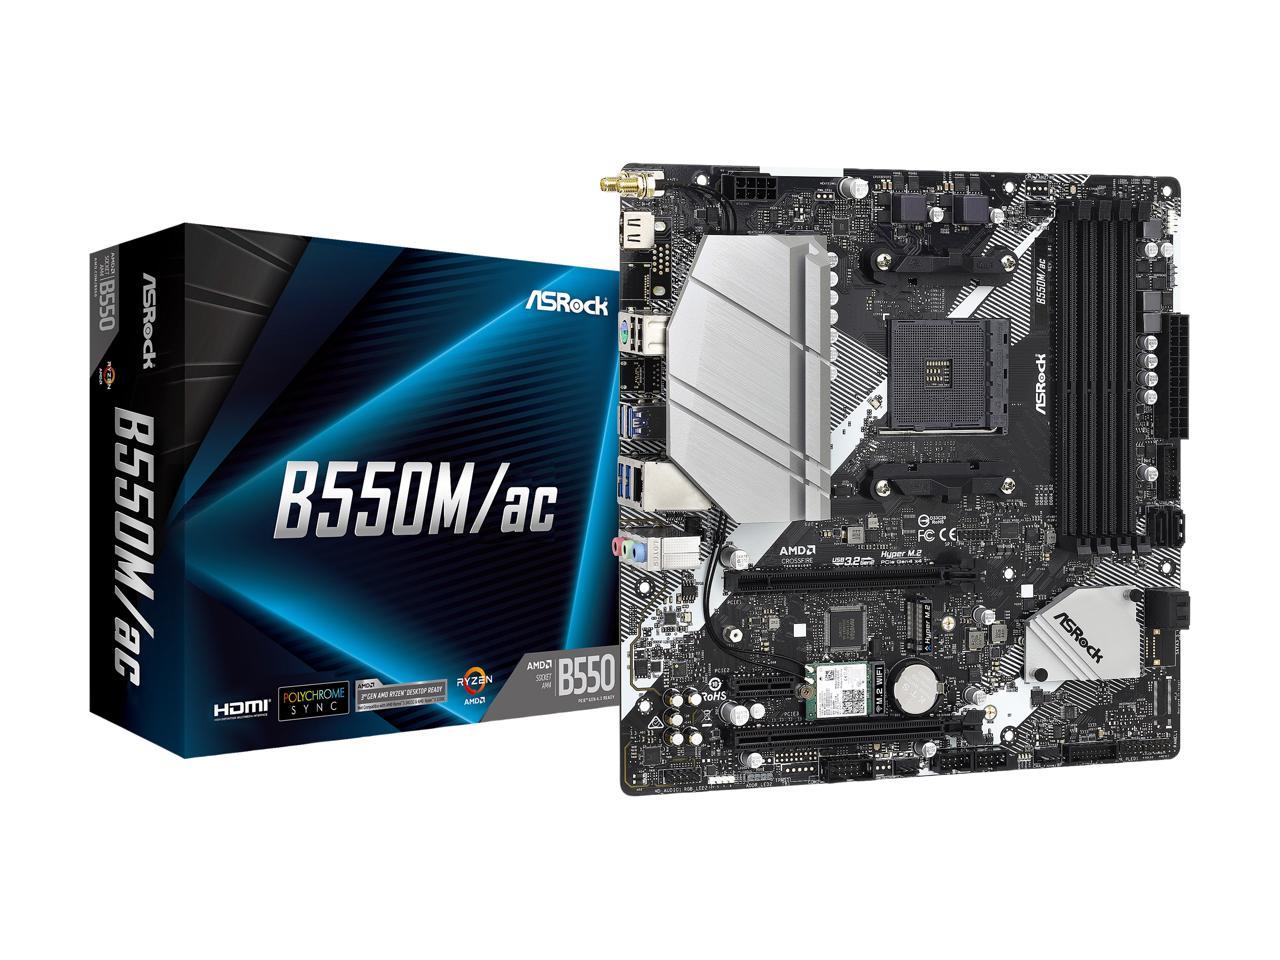 ASRock B550M/AC AM4 Micro ATX AMD Motherboard - Newegg.com